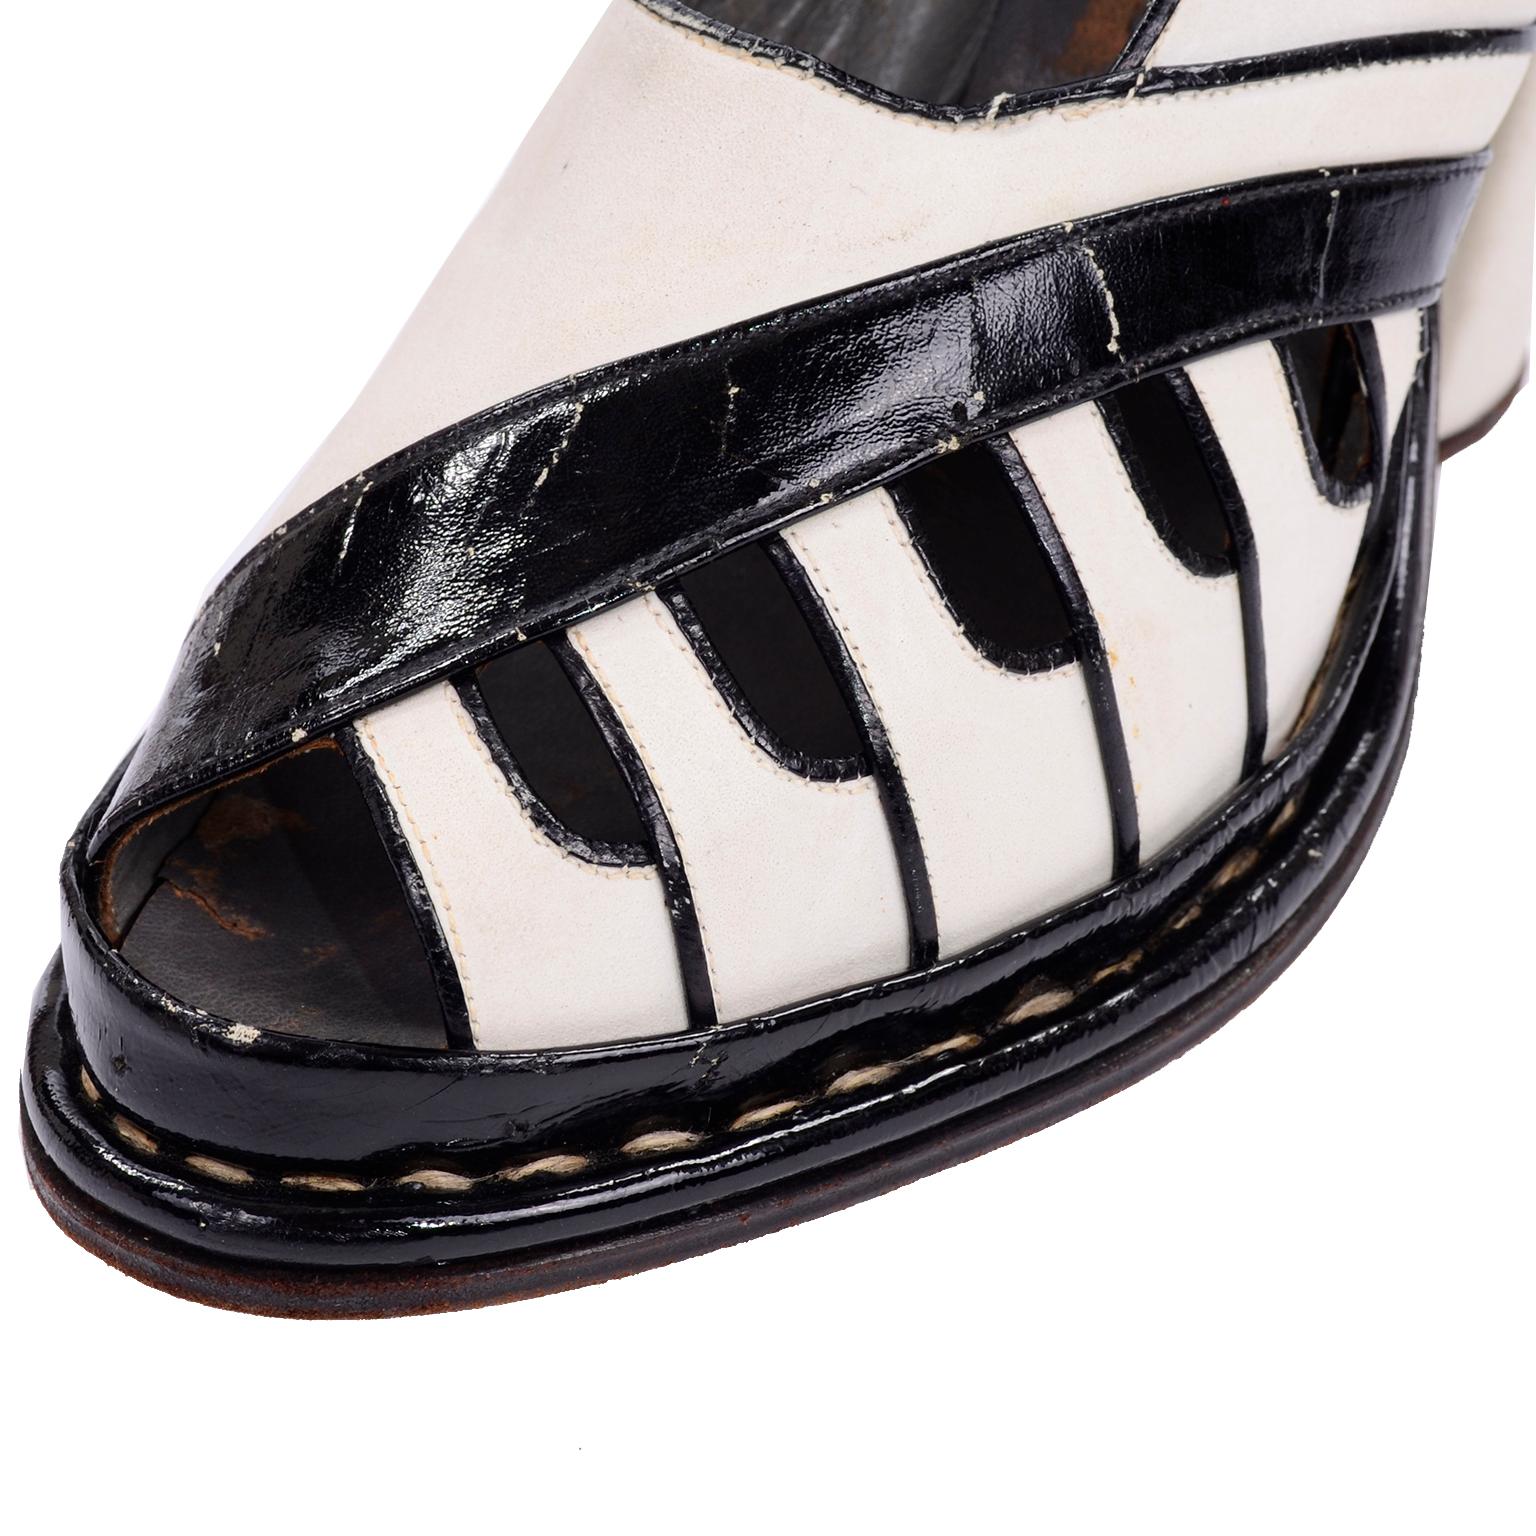 Beige Brazilian Leather 1940s Novelty Peep Toe Platform Heels Piano Key Vintage Shoes For Sale